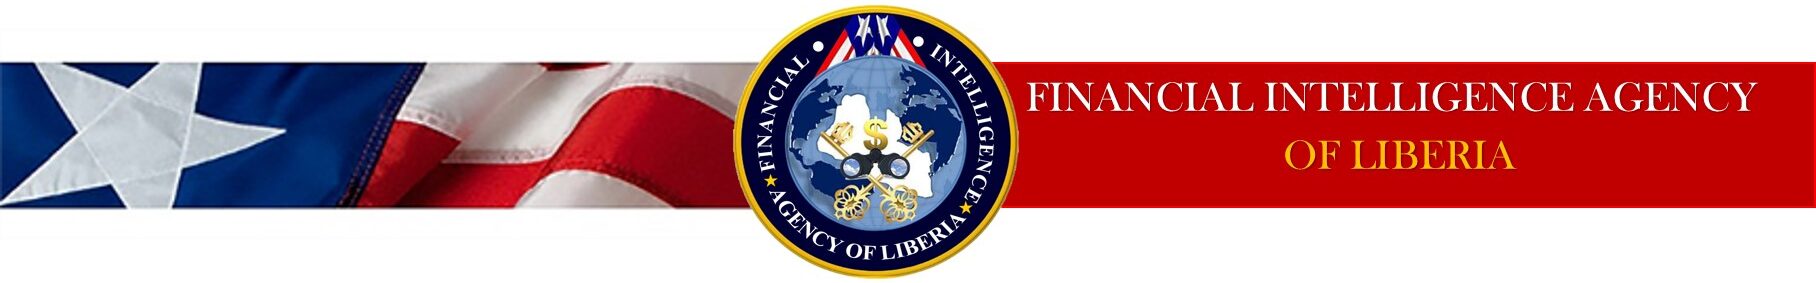 Financial Intelligence Agency of Liberia